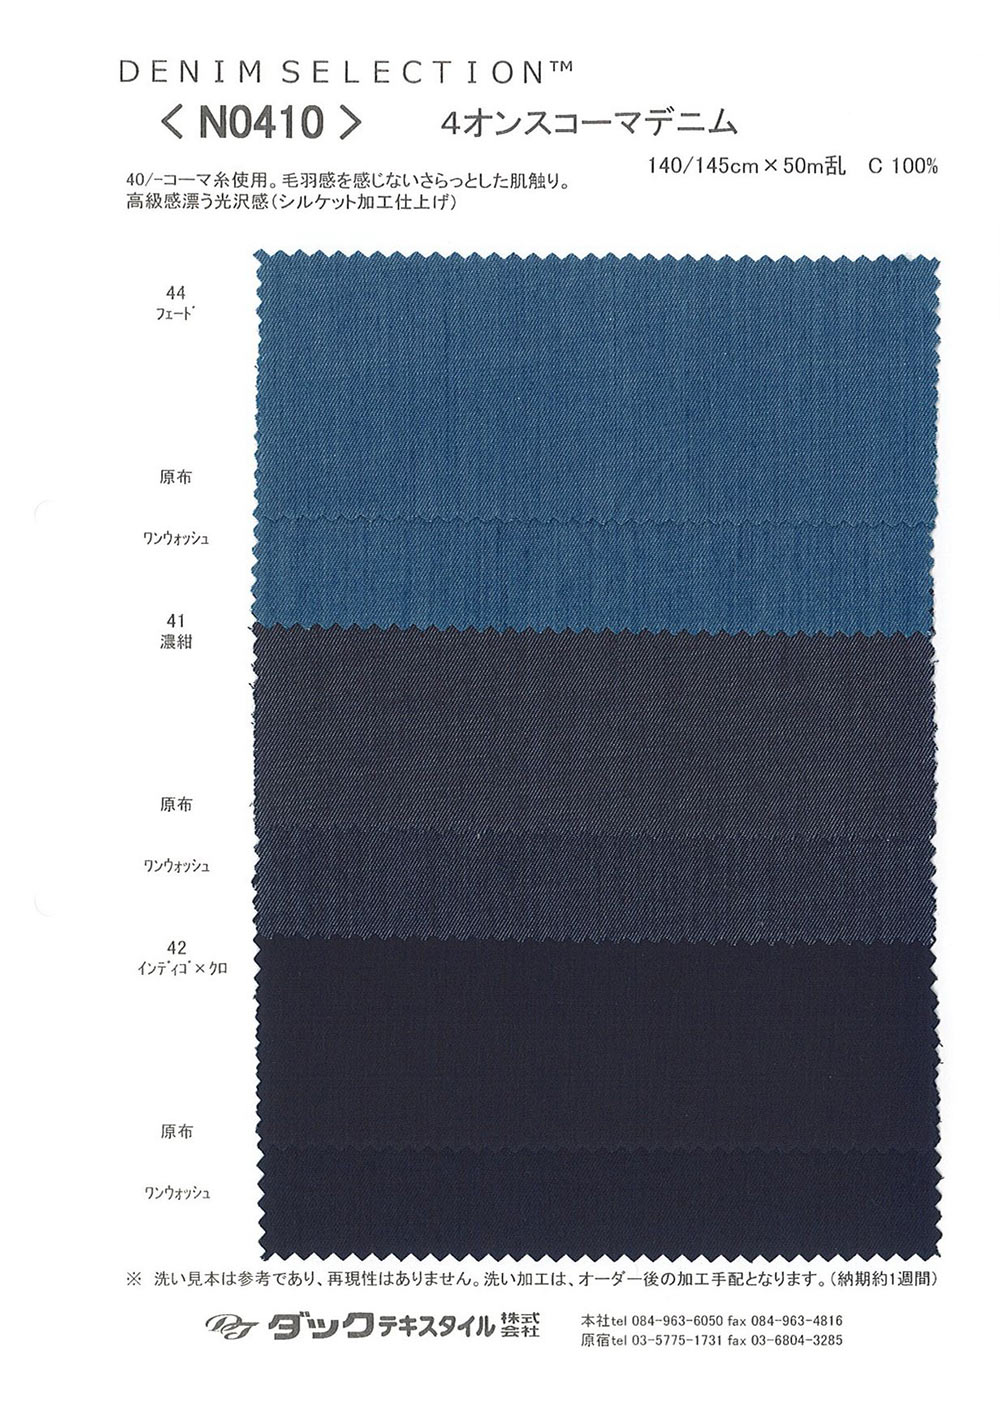 N0410 4 Oz Combed Denim[Textile / Fabric] DUCK TEXTILE